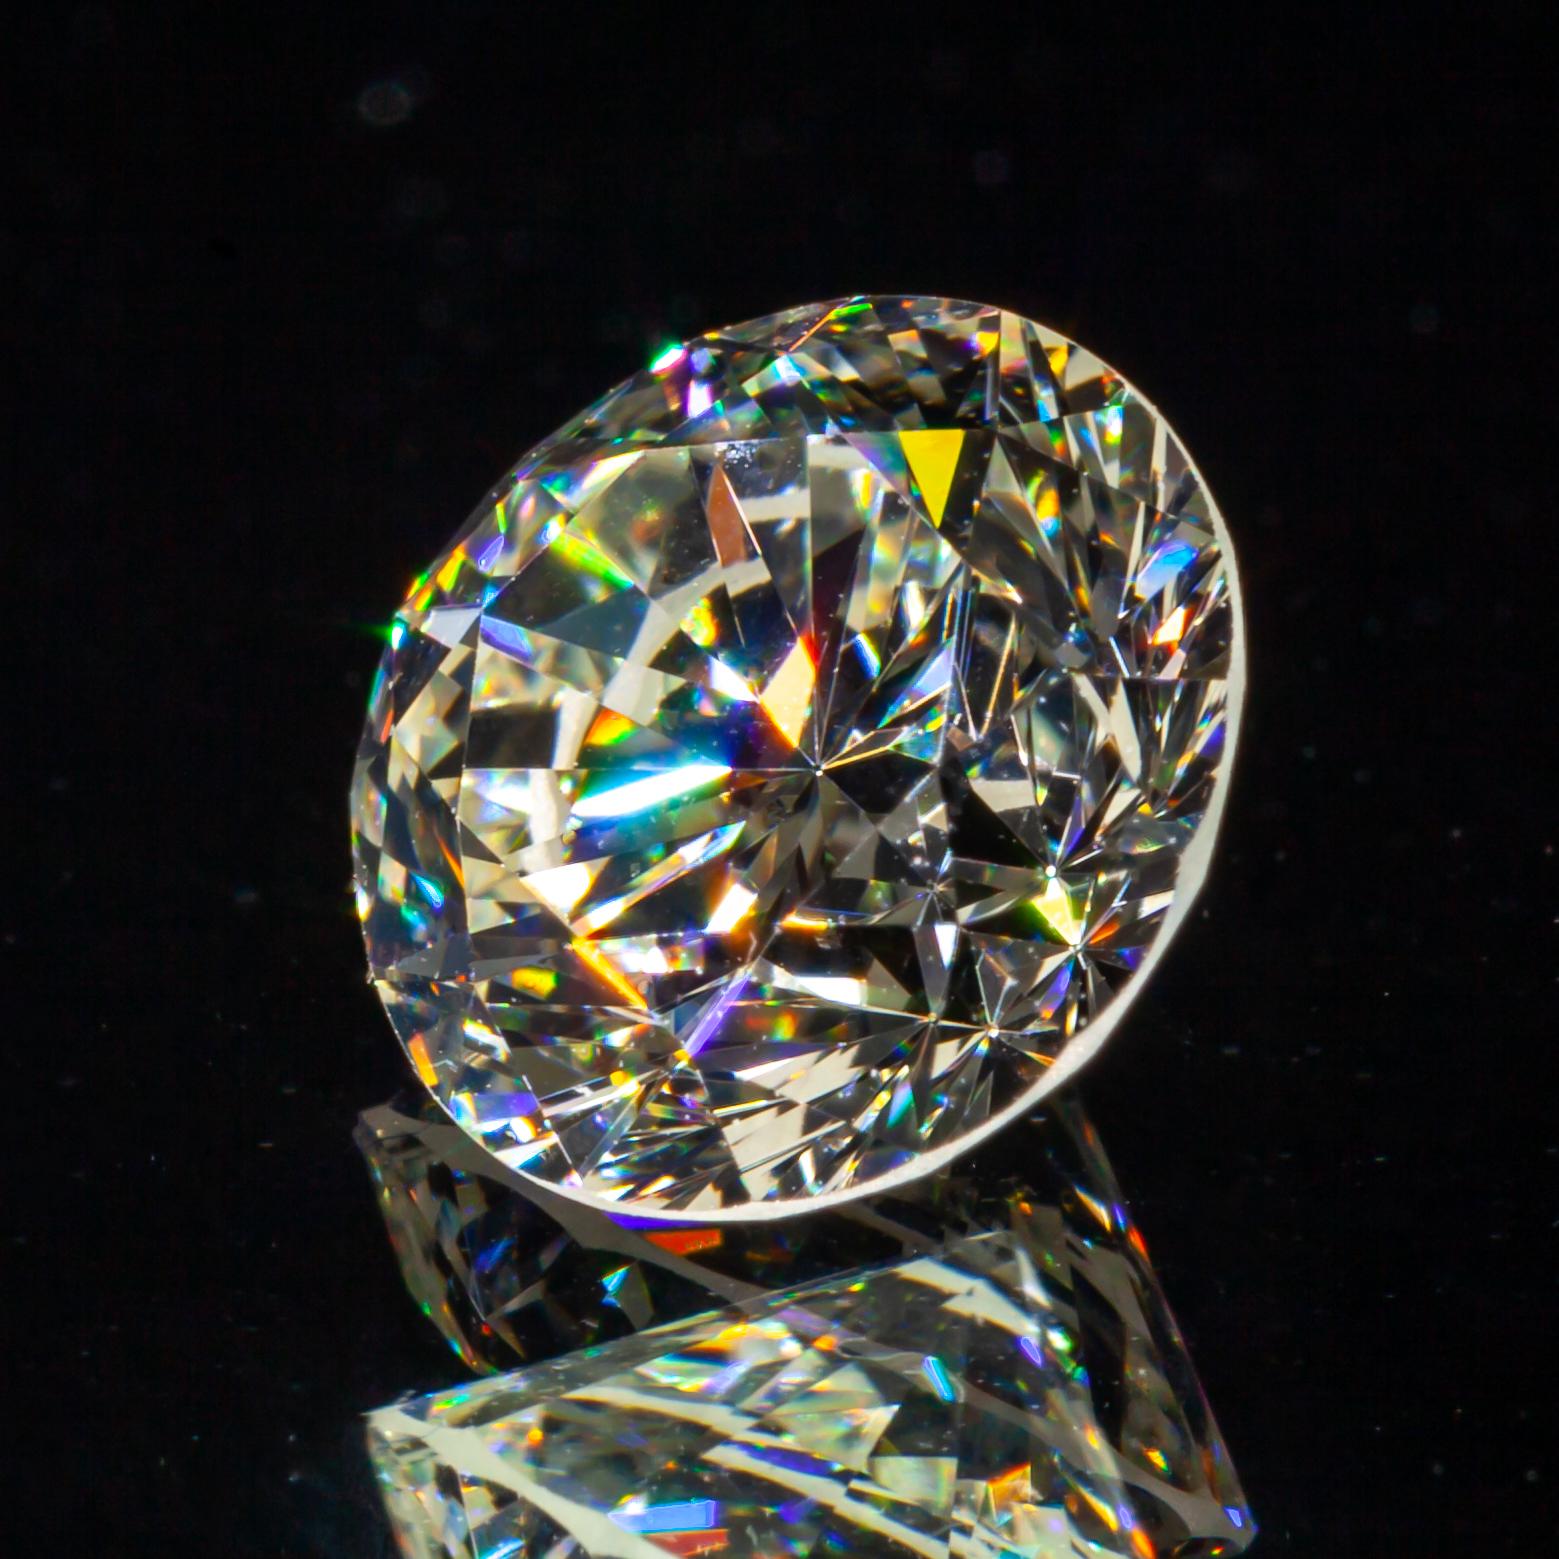 1.71 Carat Loose K / VS2 Round Brilliant Cut Diamond GIA Certified

Diamond General Info
GIA Report Number: 1182391857
Diamond Cut: Round Brilliant
Measurements:
7.60  x  7.53  -  4.79

Diamond Grading Results
Carat Weight:1.71
Color Grade: